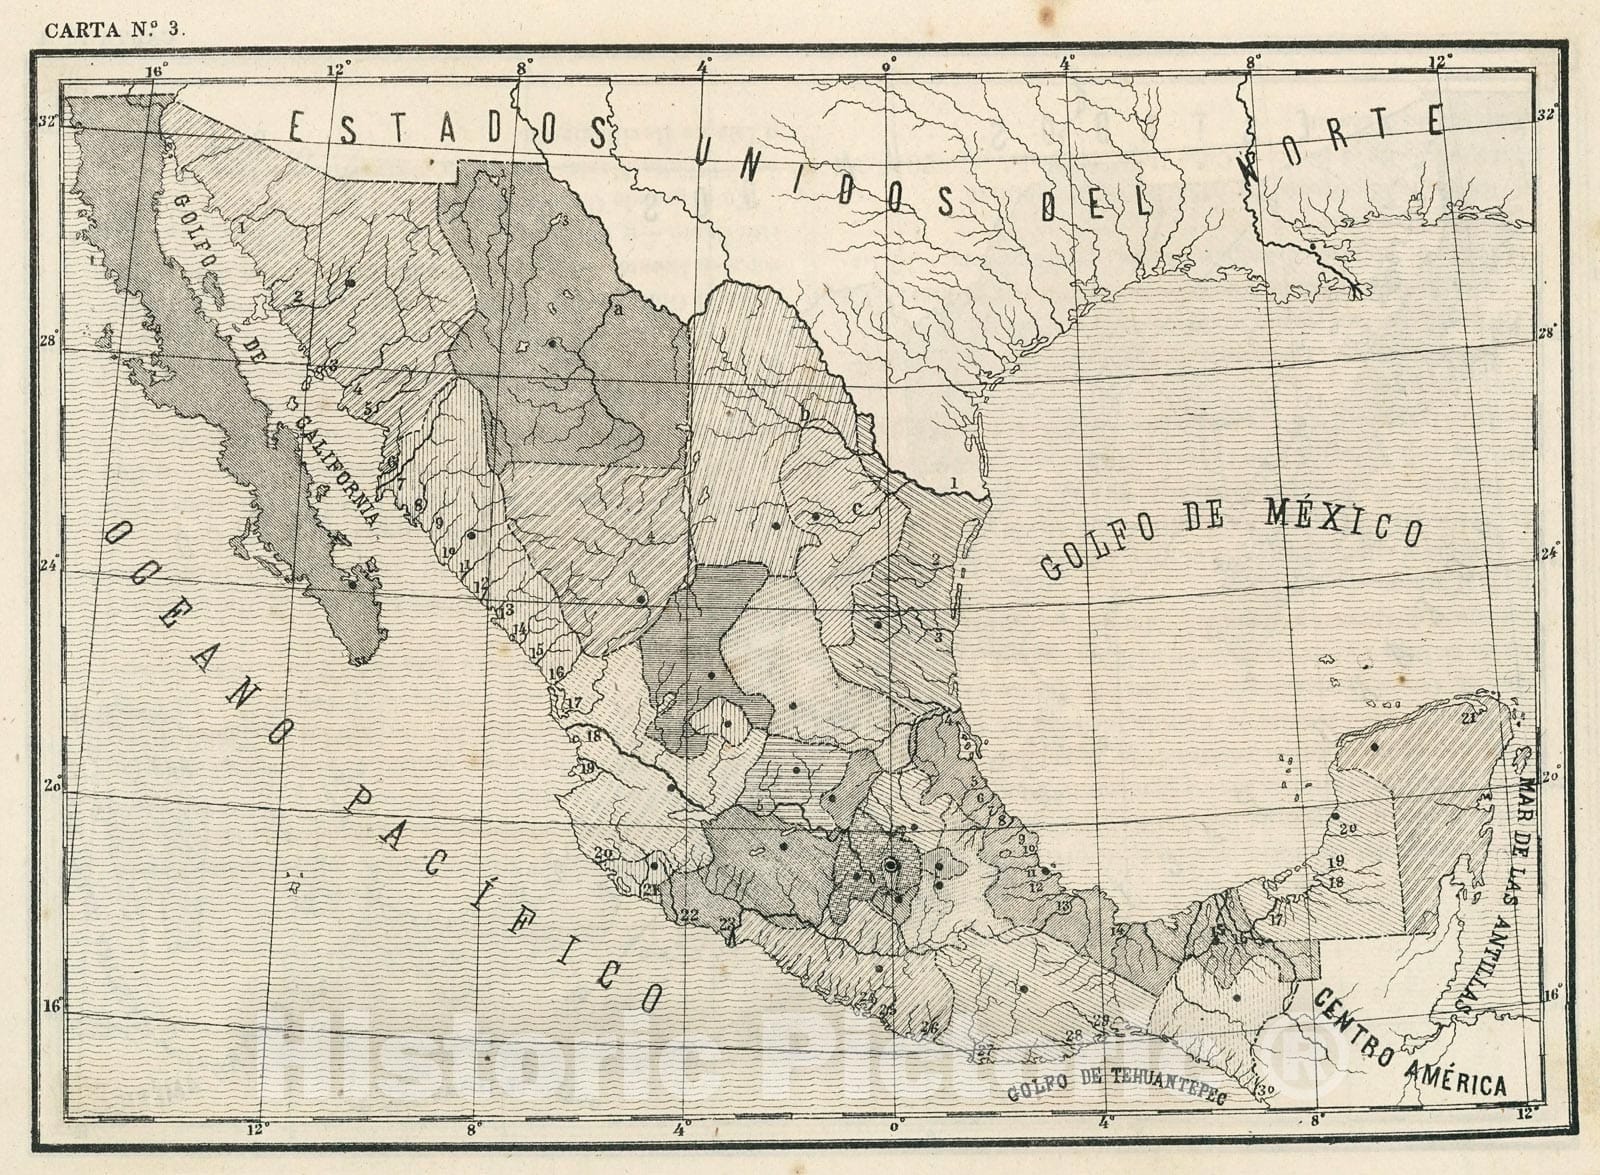 Historic Map : Text and Atlas Map: Carta Num. 3. Rios Principales de la Republica., 1874, Vintage Wall Decor